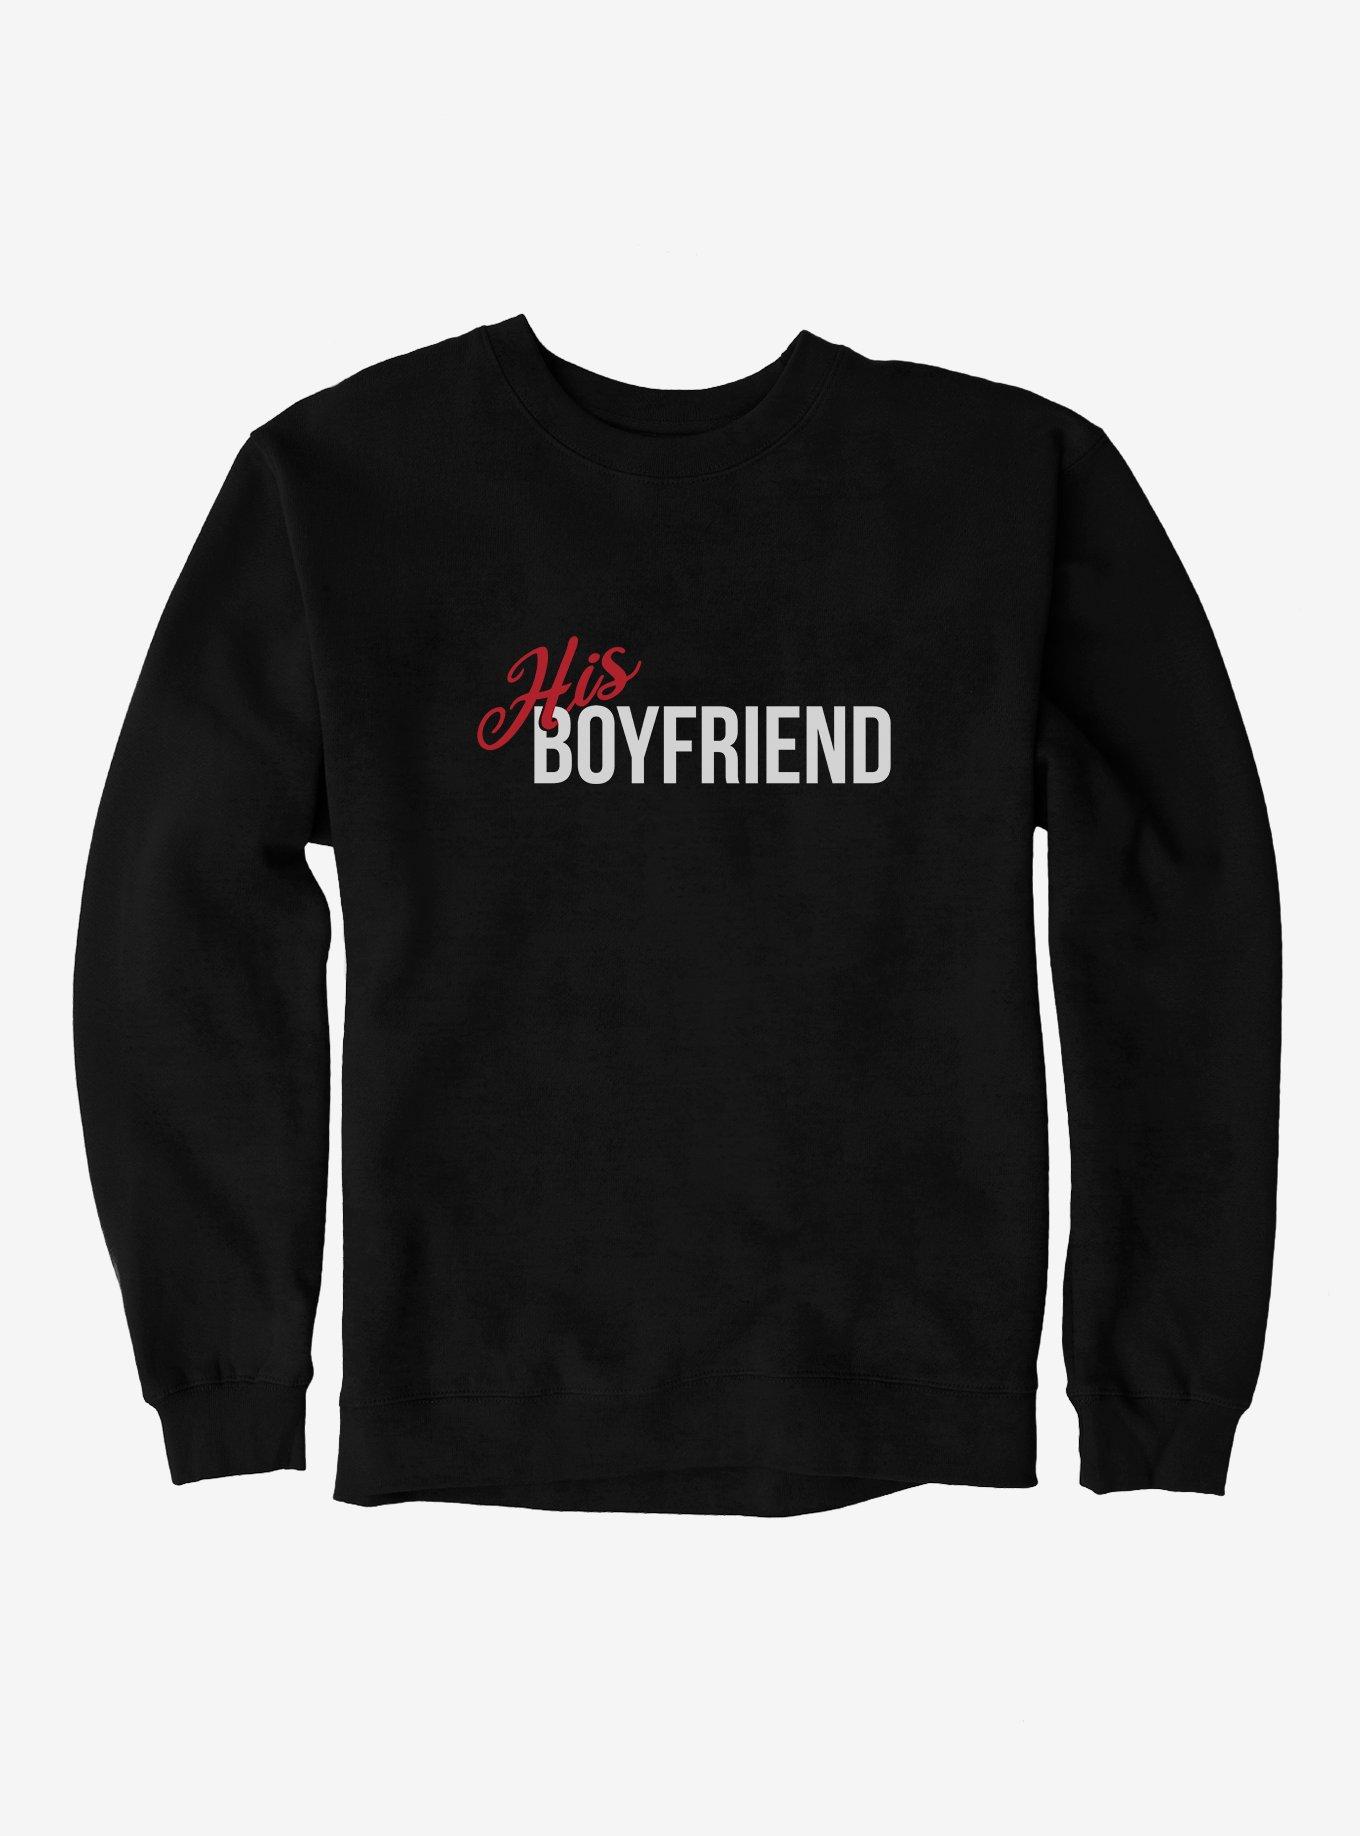 Hot Topic His Boyfriend Sweatshirt